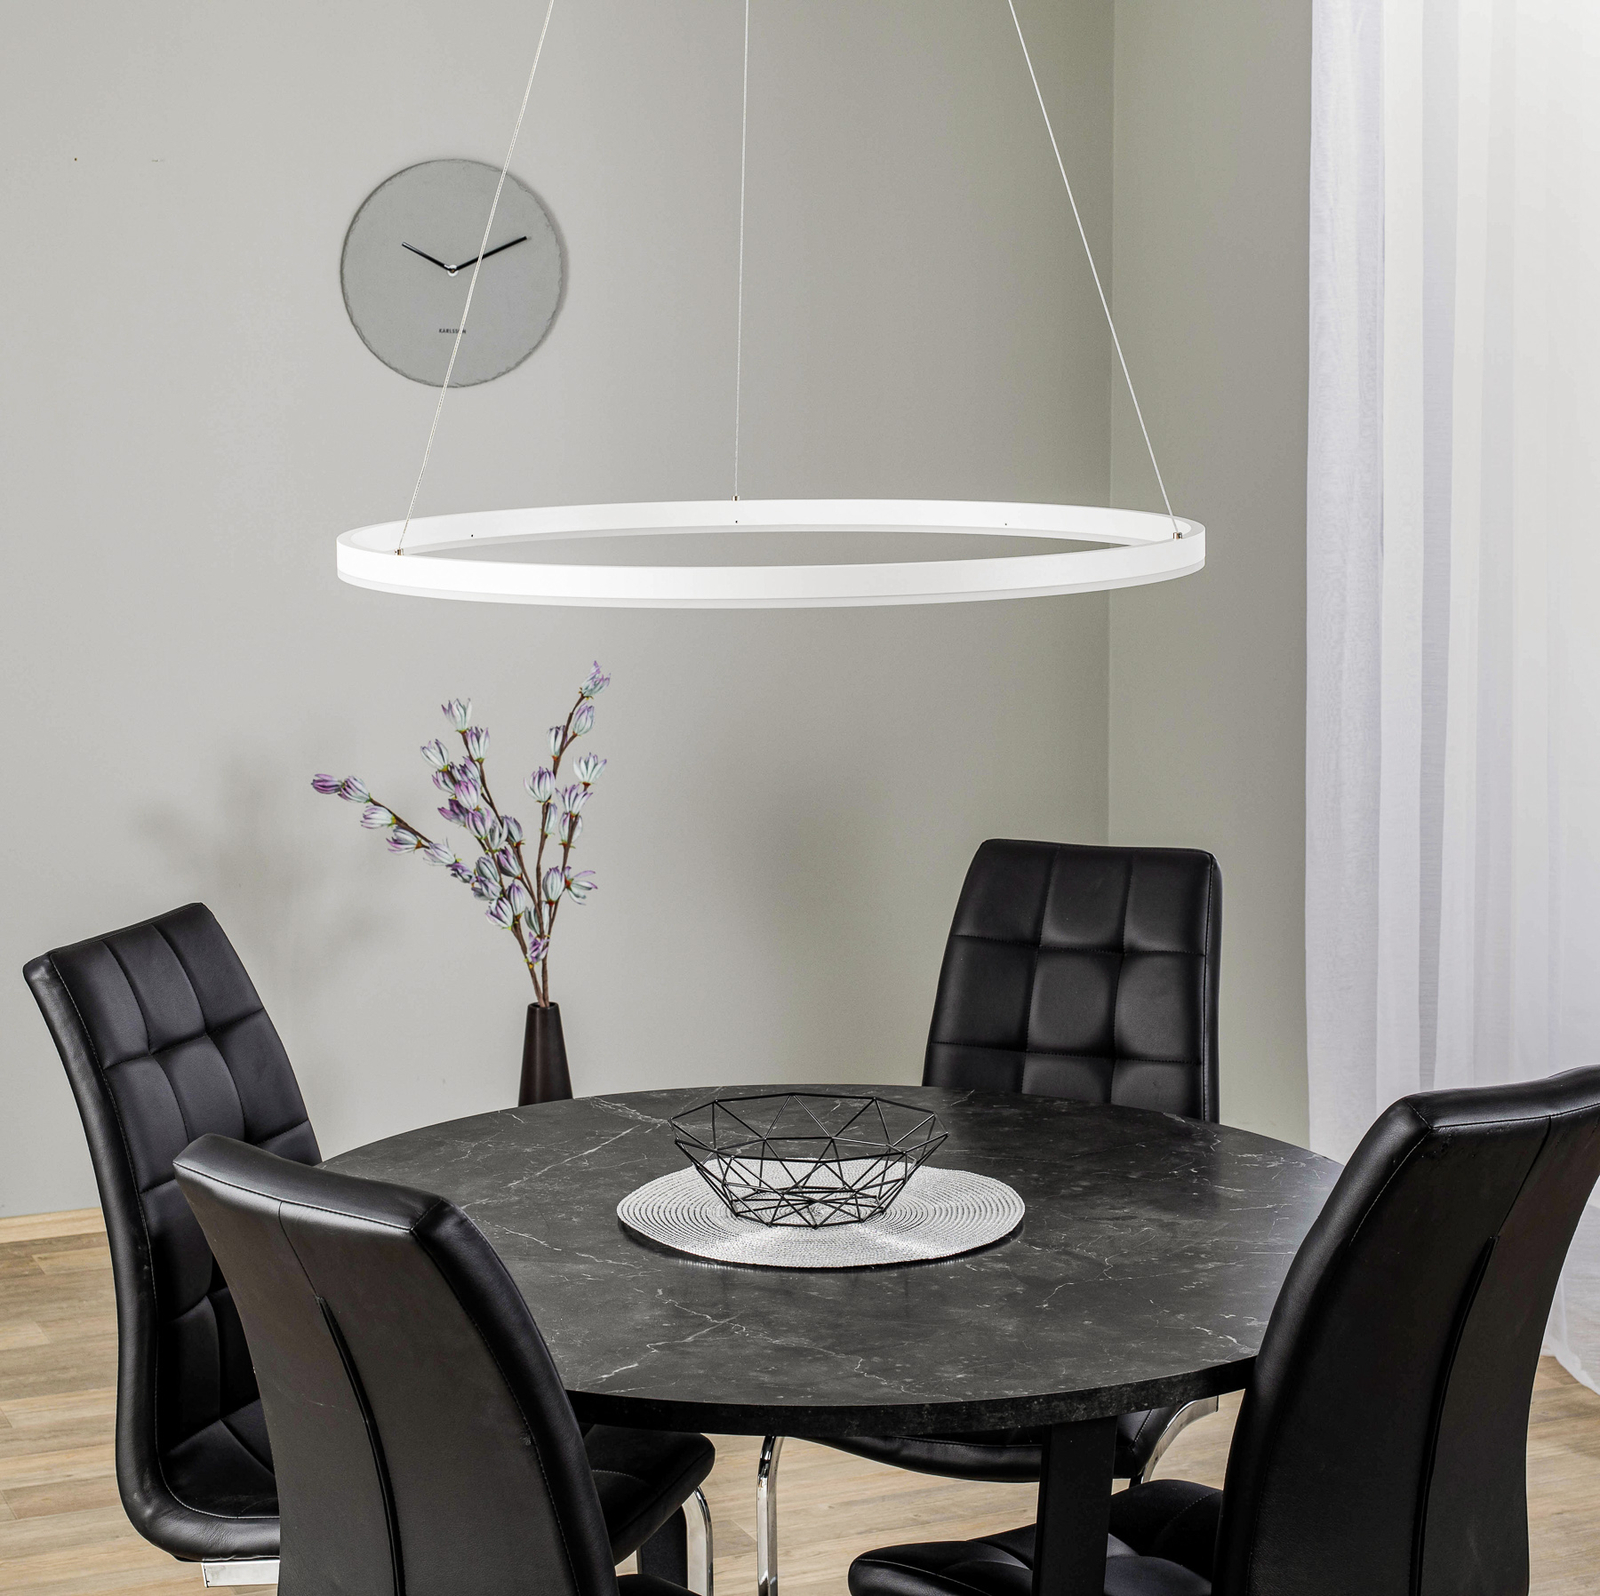 Arcchio Albiona LED hanglamp, wit, 80 cm